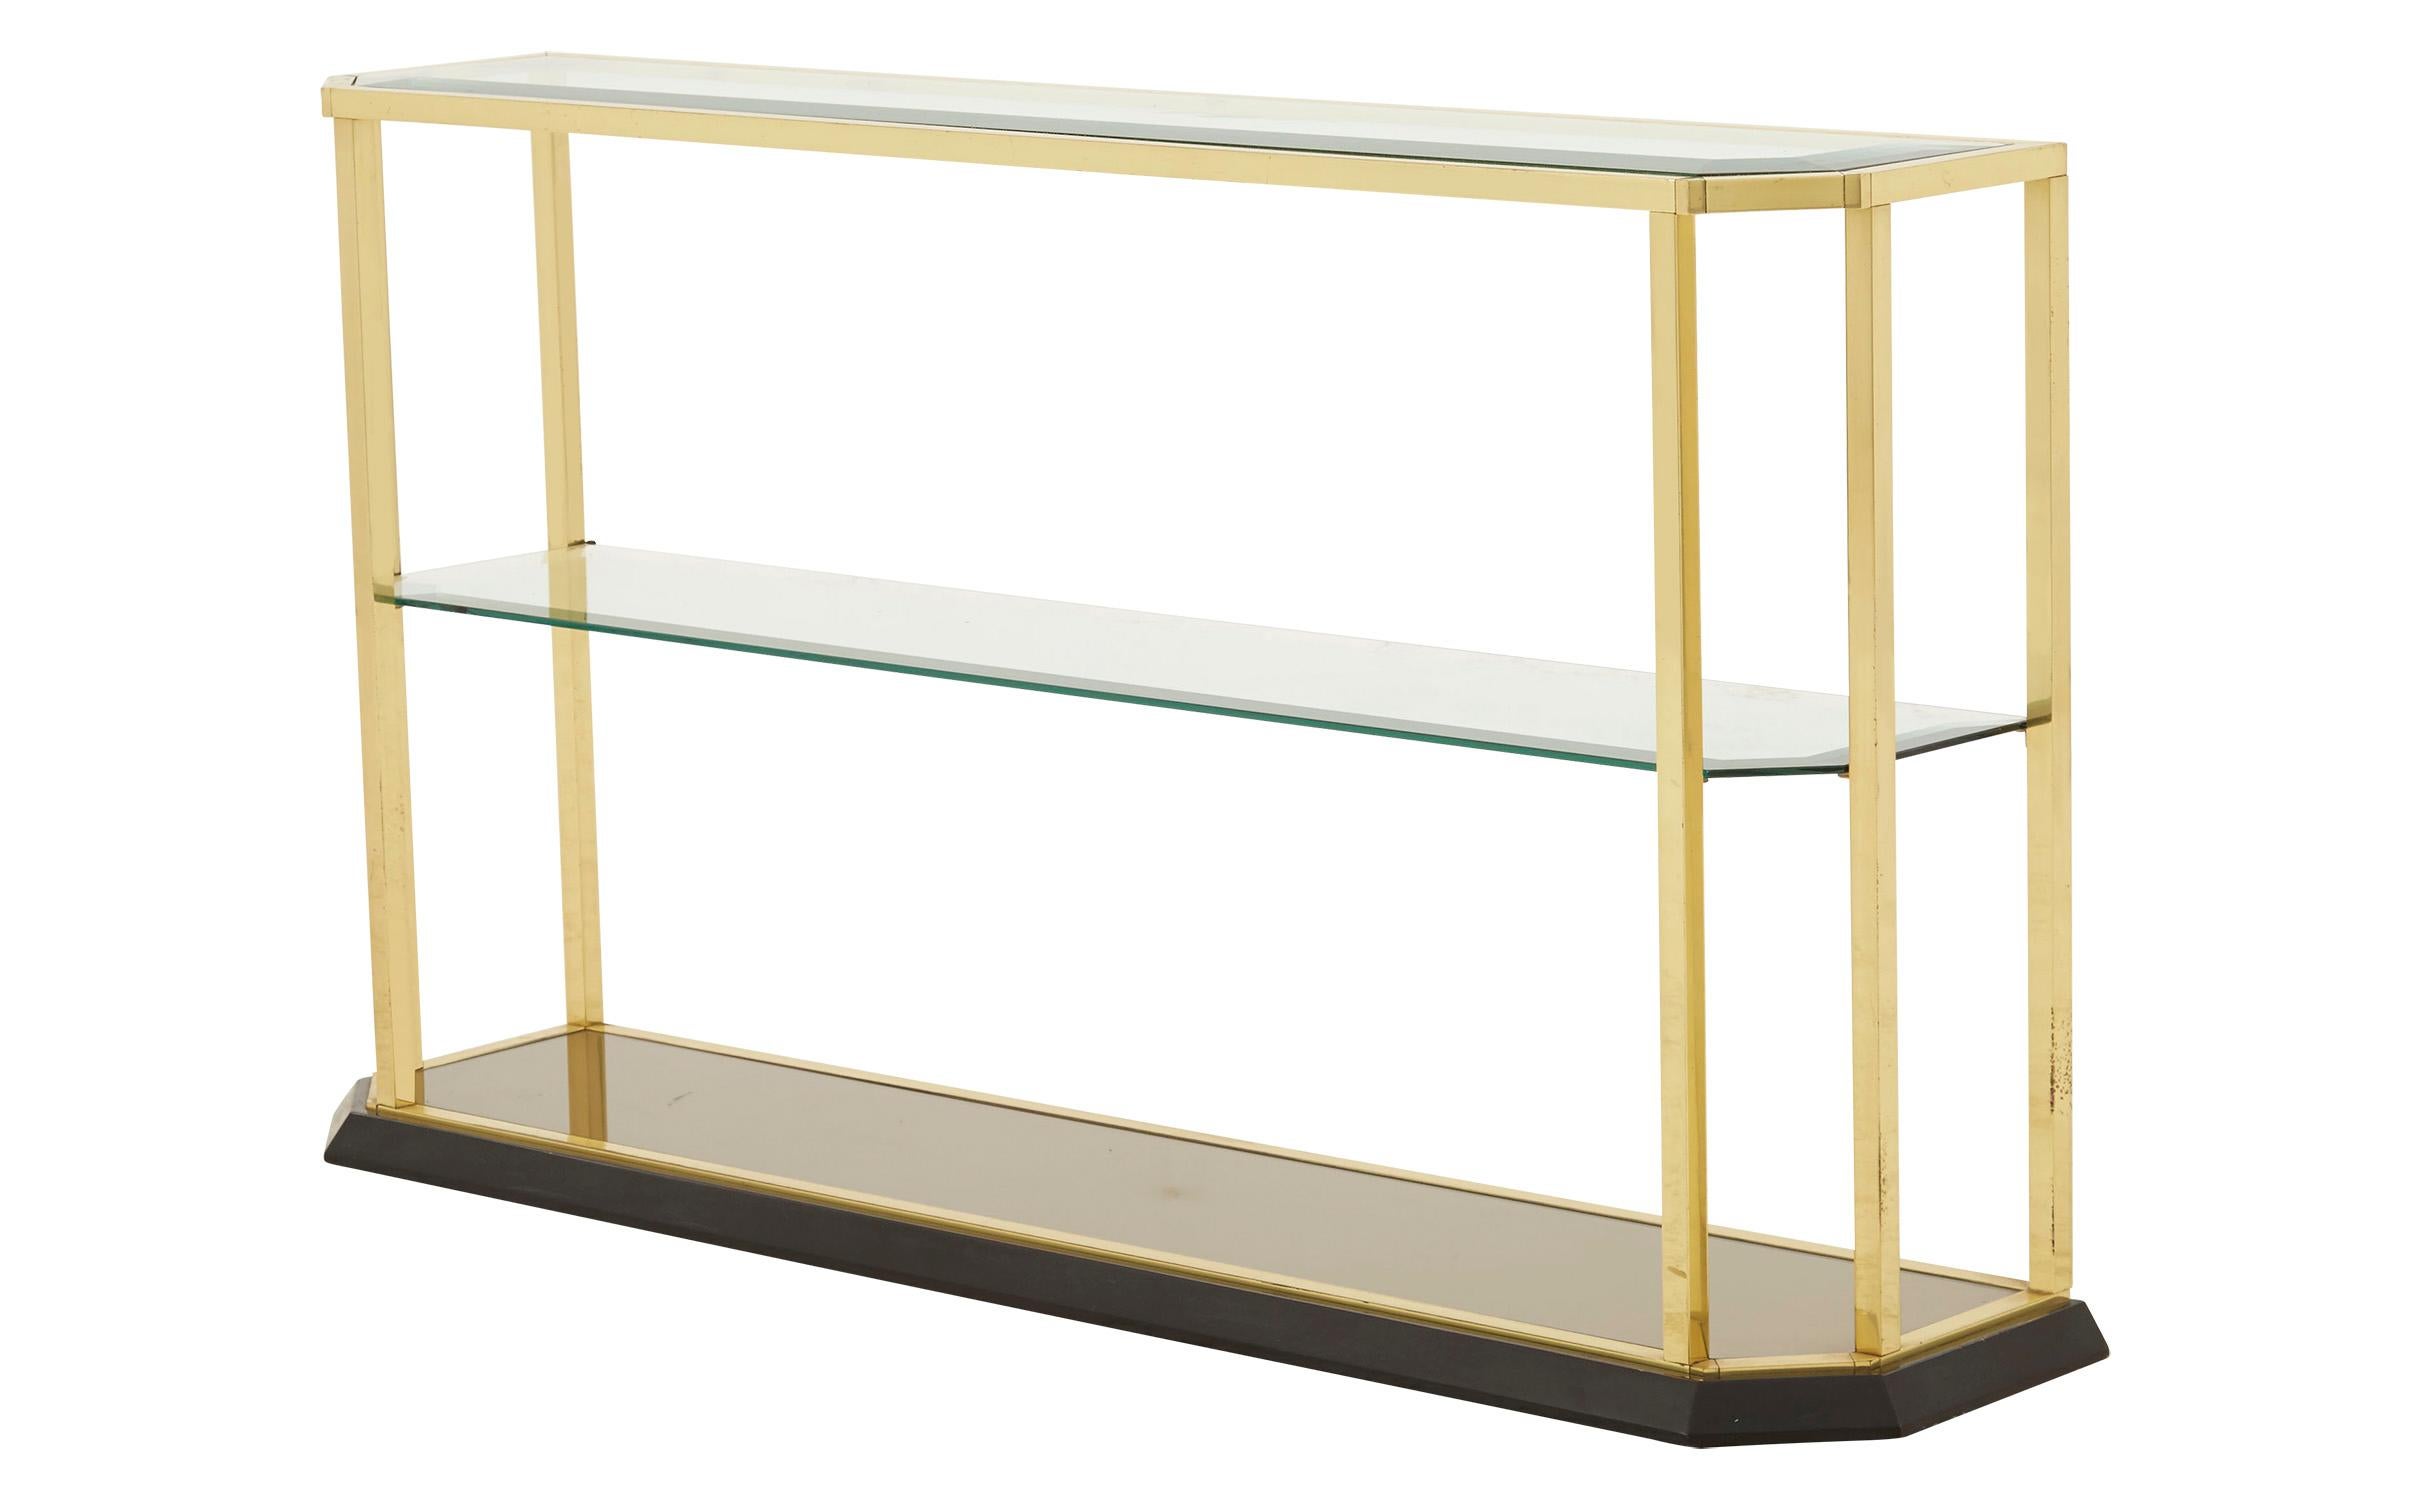 • Brass frame
• Black wood base
• Original beveled glass
• Mirrored bottom shelf
• 20th century
• Spain
• Measures 53.5